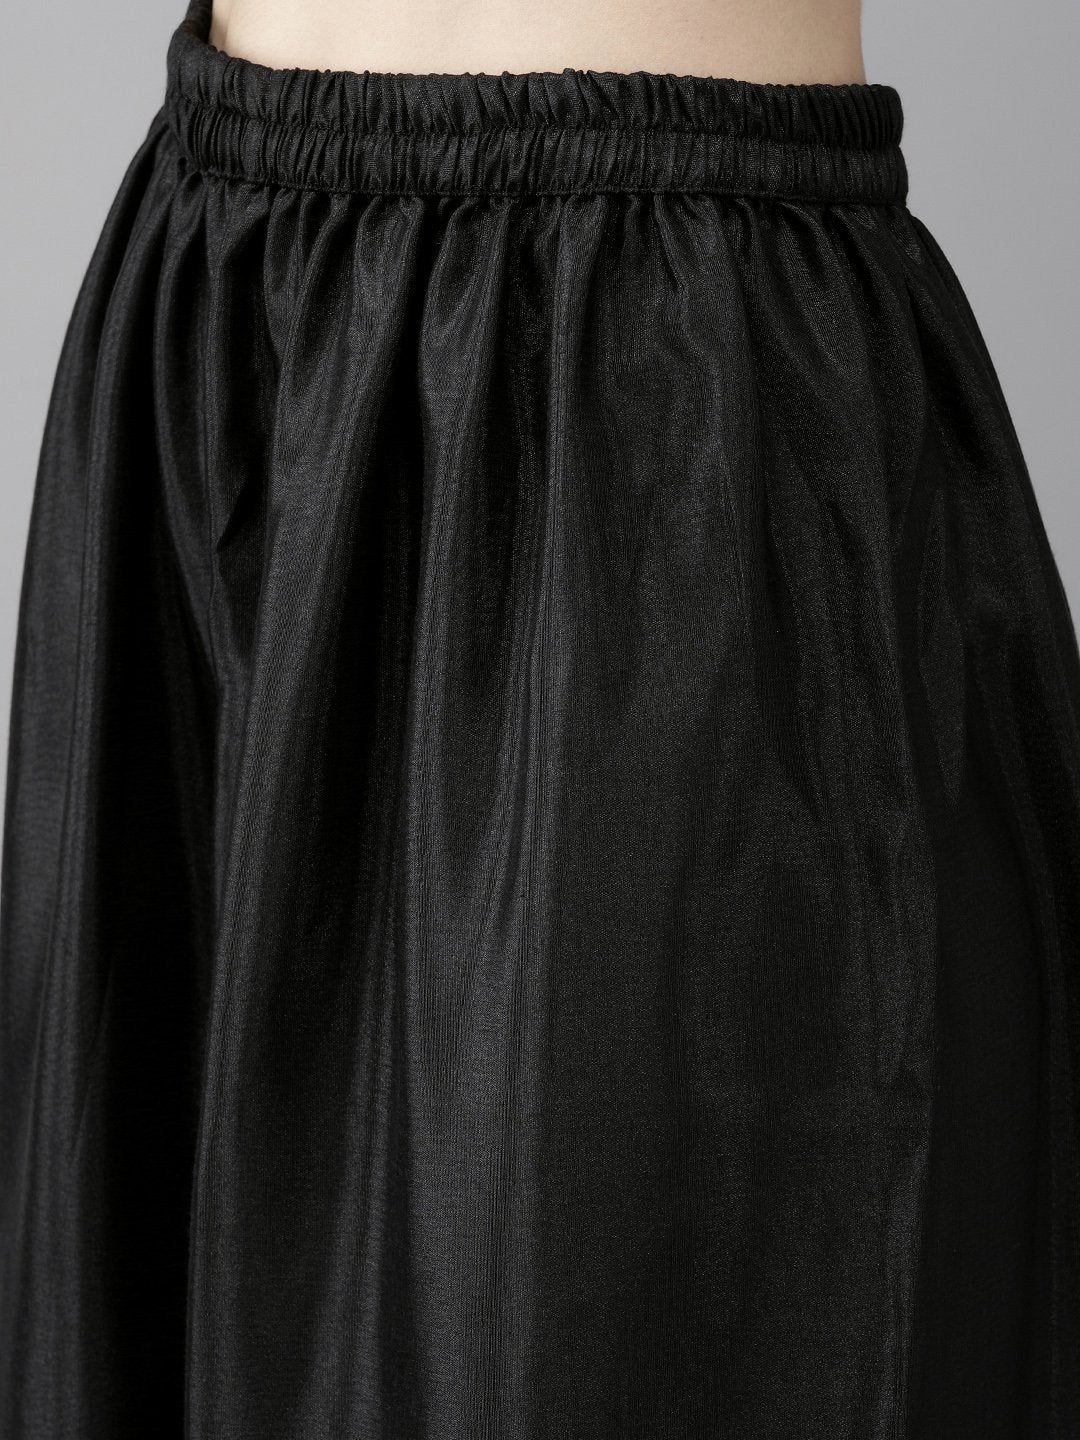 Ishin Women's Poly Georgette Grey & Black Embroidered A-Line Kurta Palazzo Dupatta Set